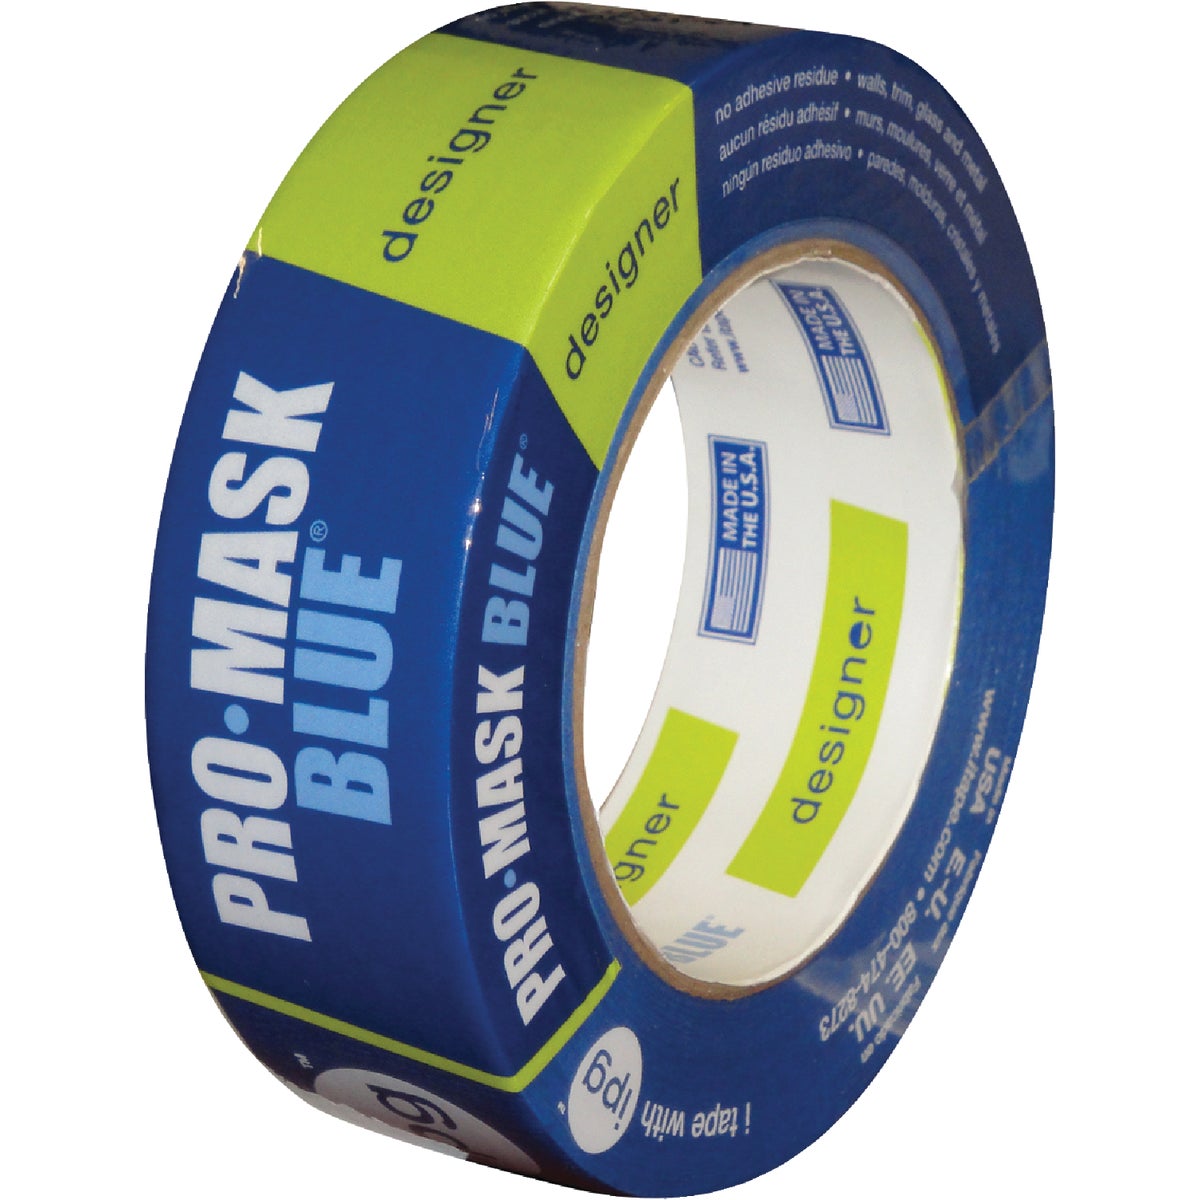 IPG ProMask Blue 1.41 In. x 60 Yd. Designer Masking Tape